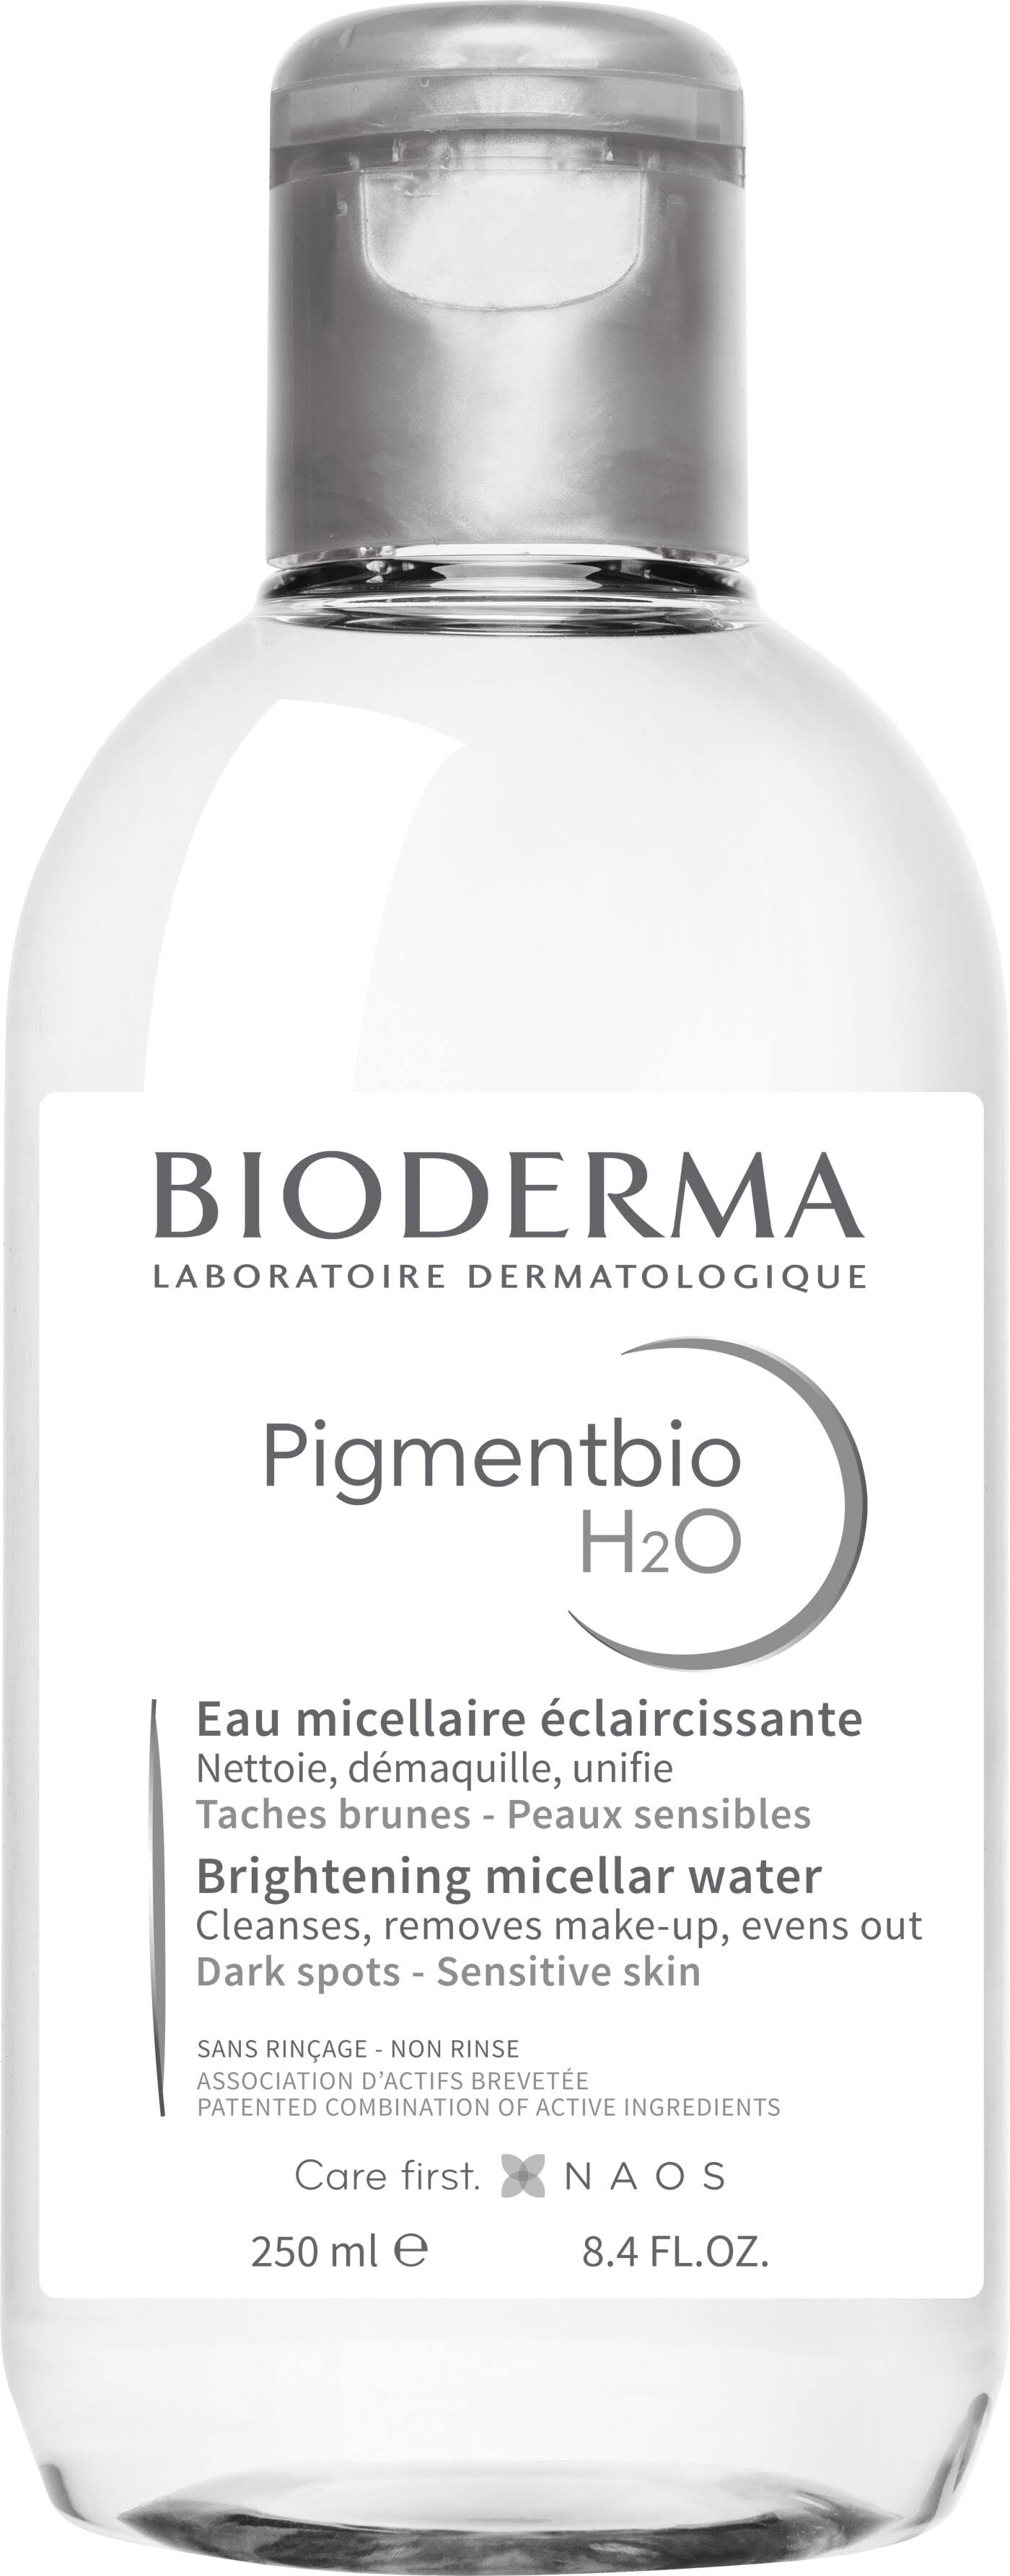 Bioderma Pigmentbio H2O - Brightening Micellar Water 250ml